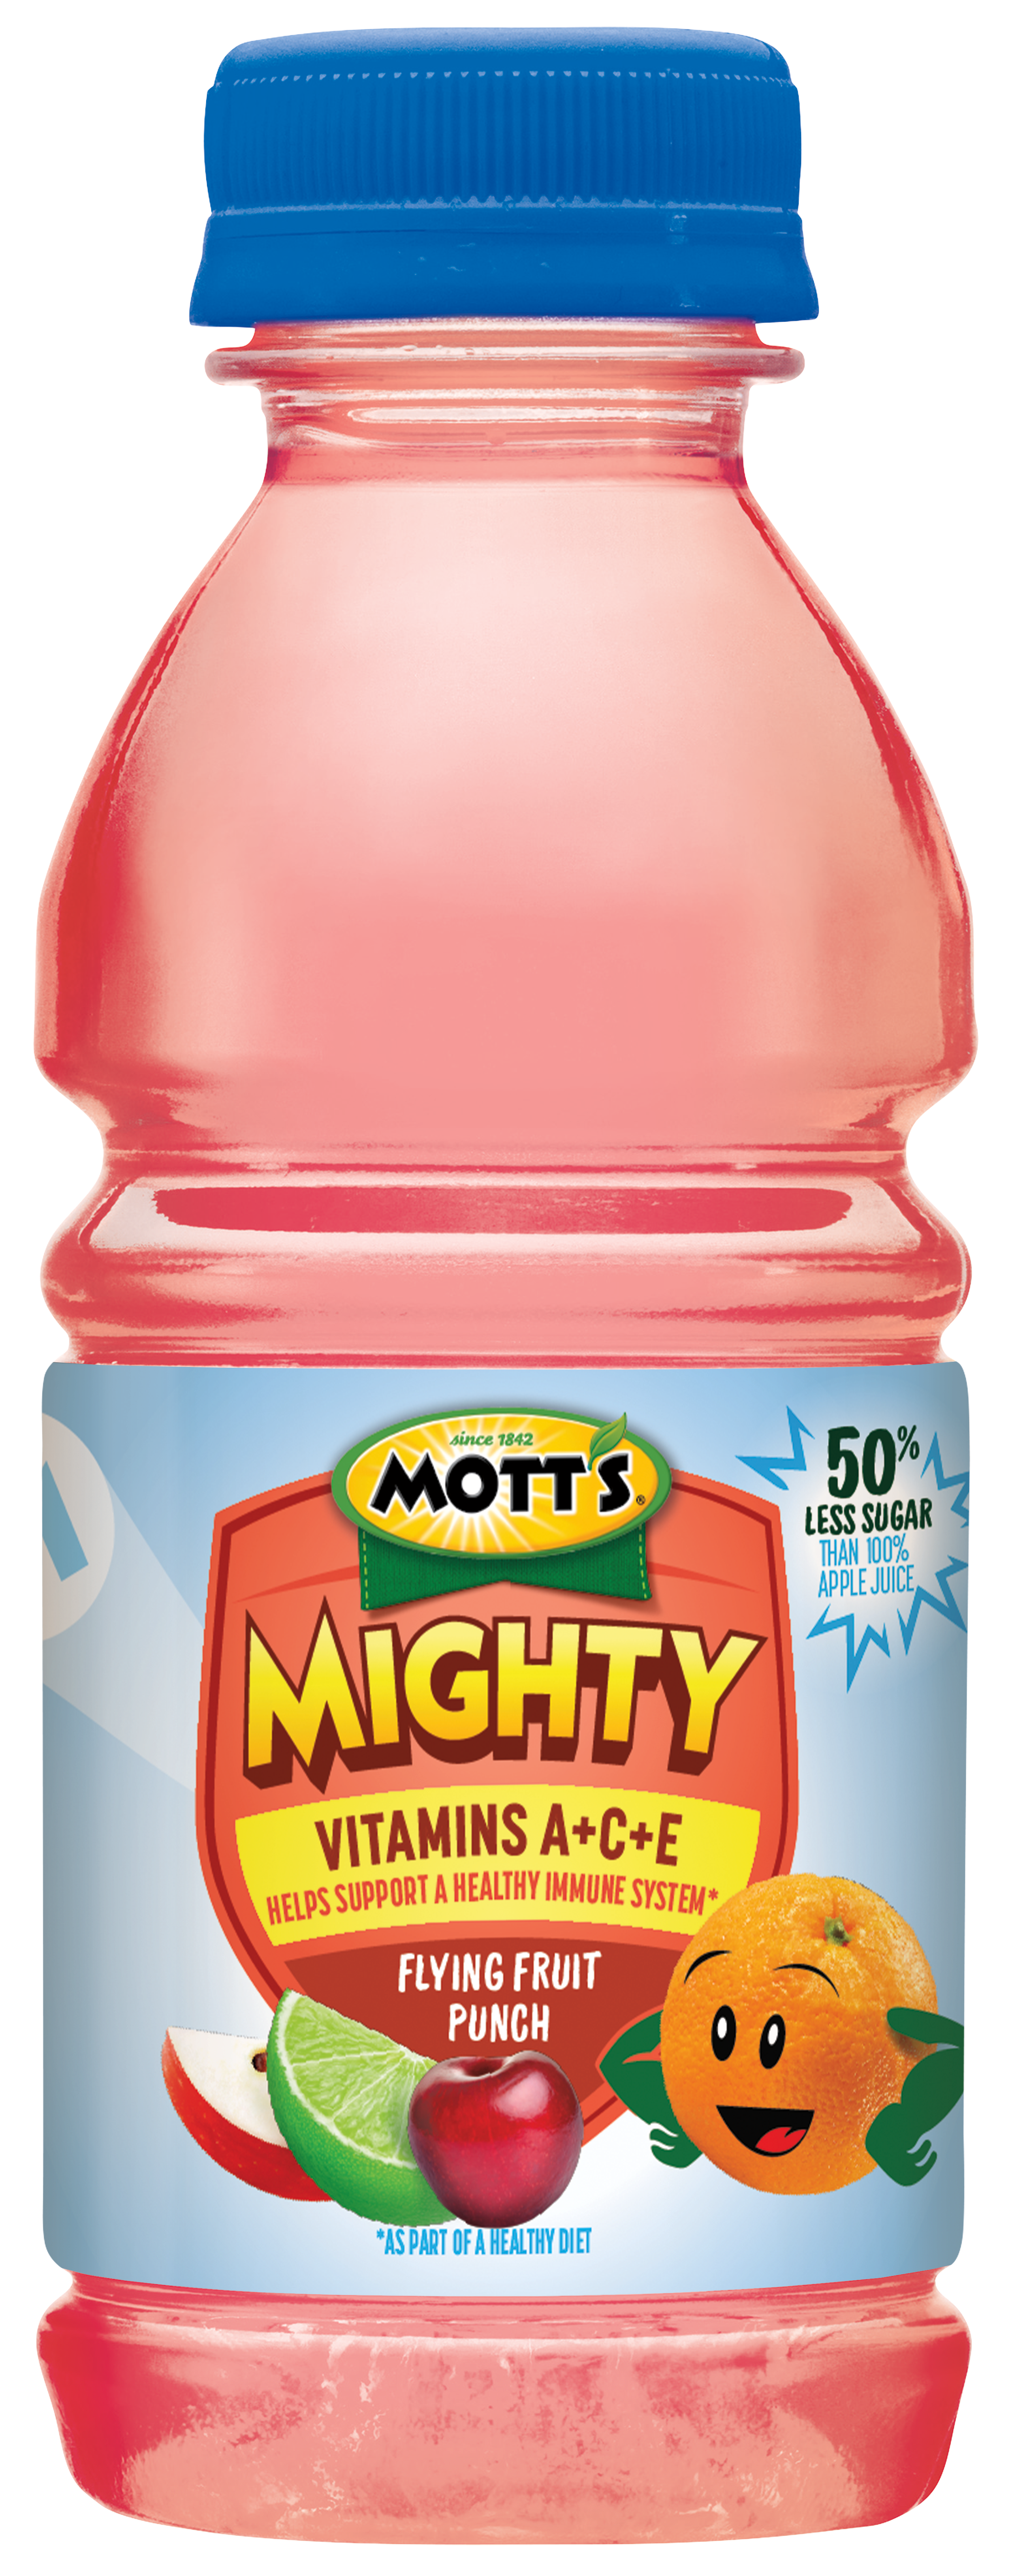 Mott's Mighty Flying Fruit Punch